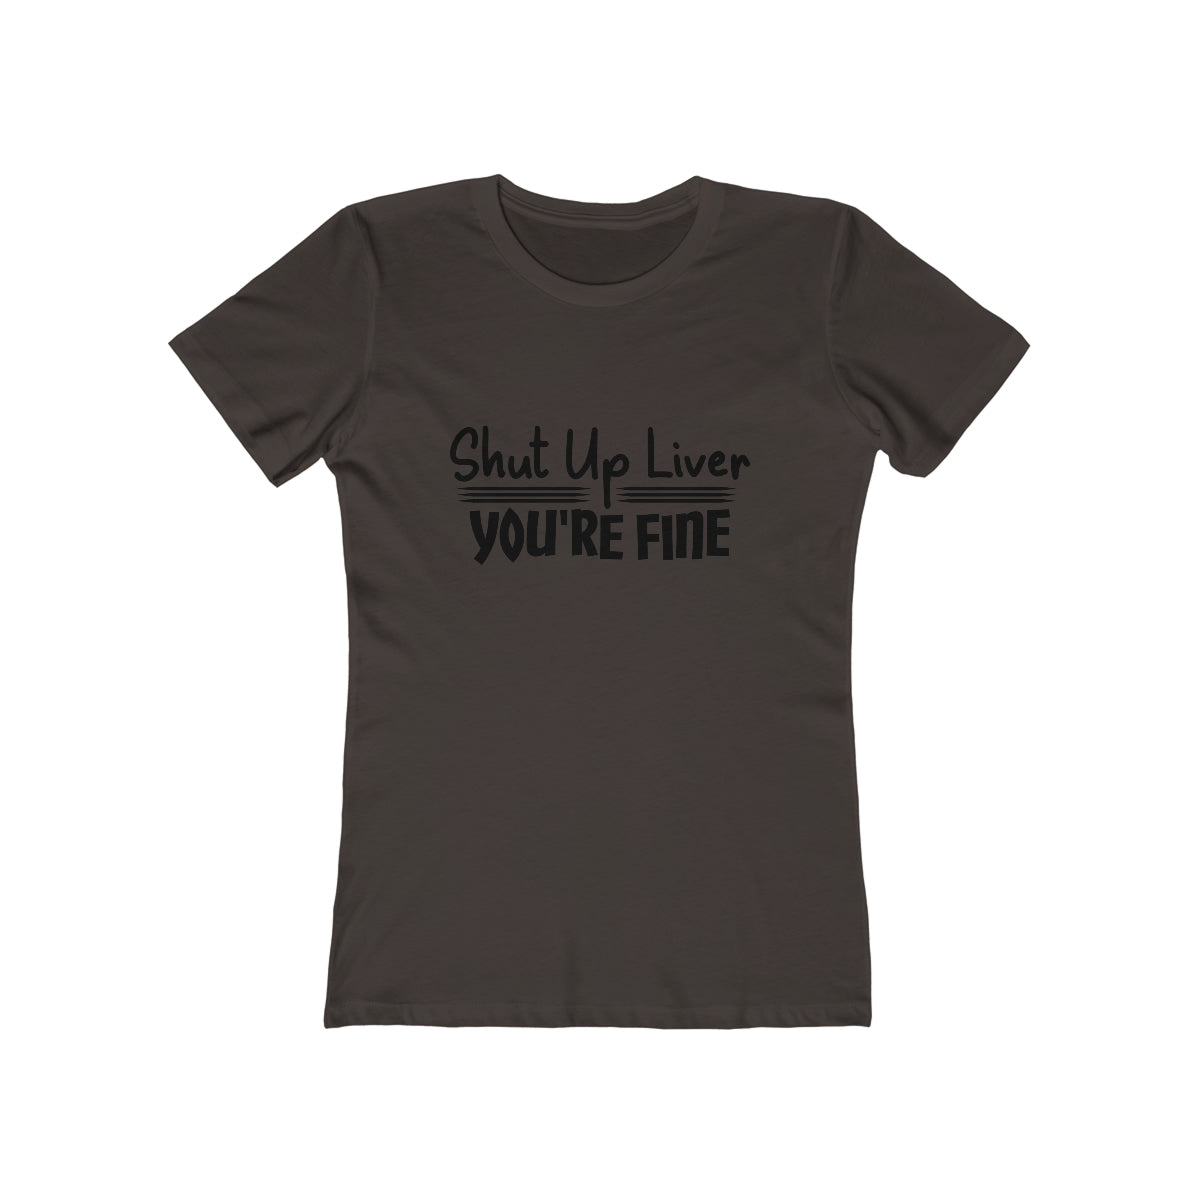 Shut Up Liver You're Fine - Women's T-shirt